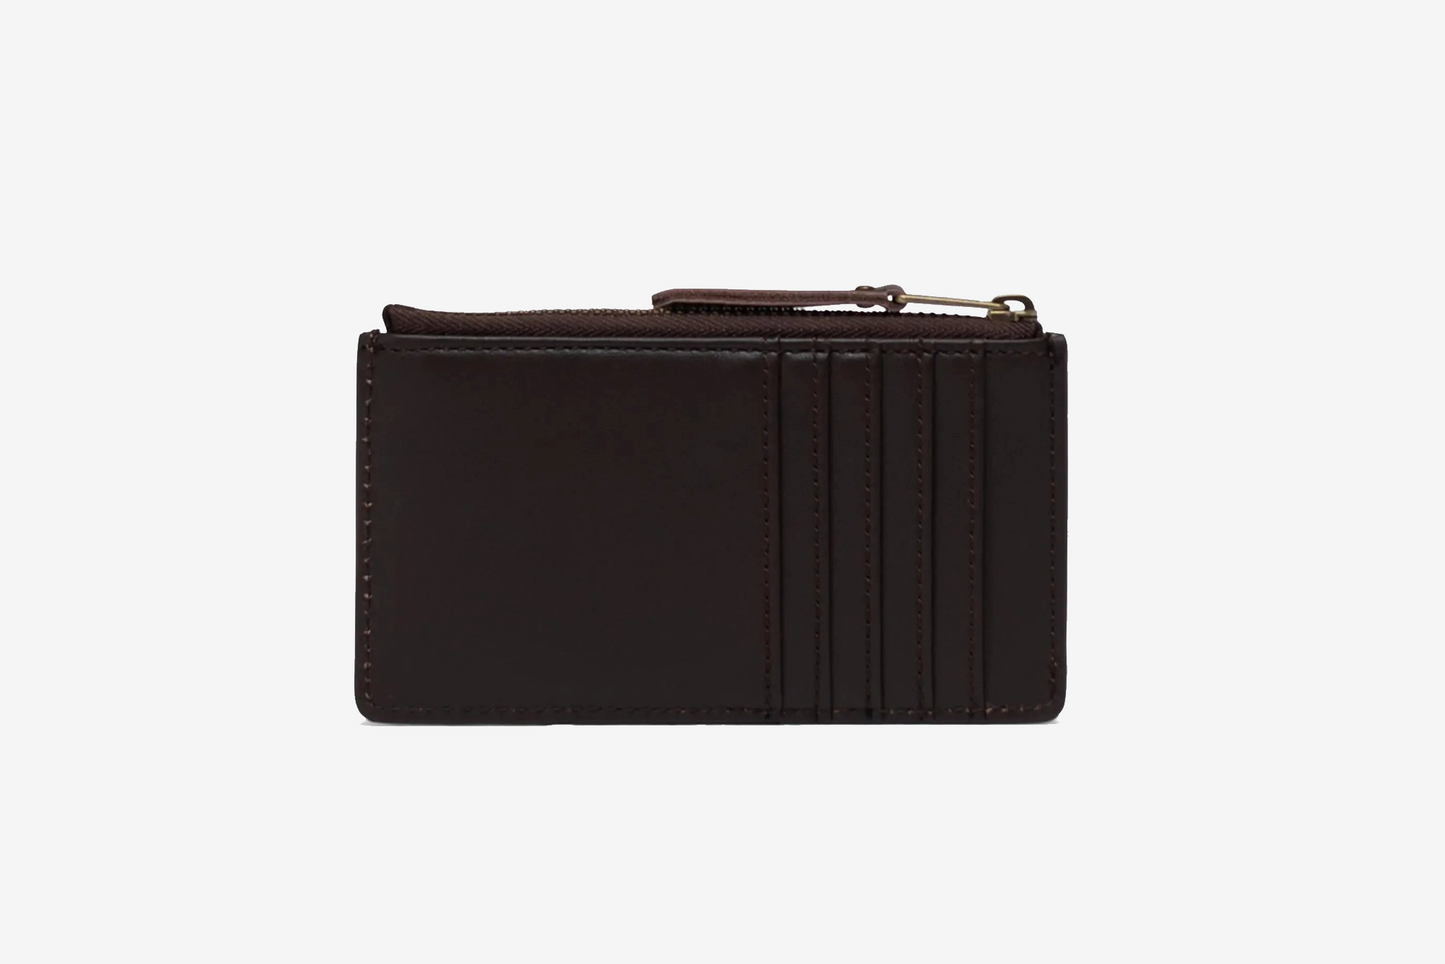 Herschel "Oscar Leather Wallet" - Brown